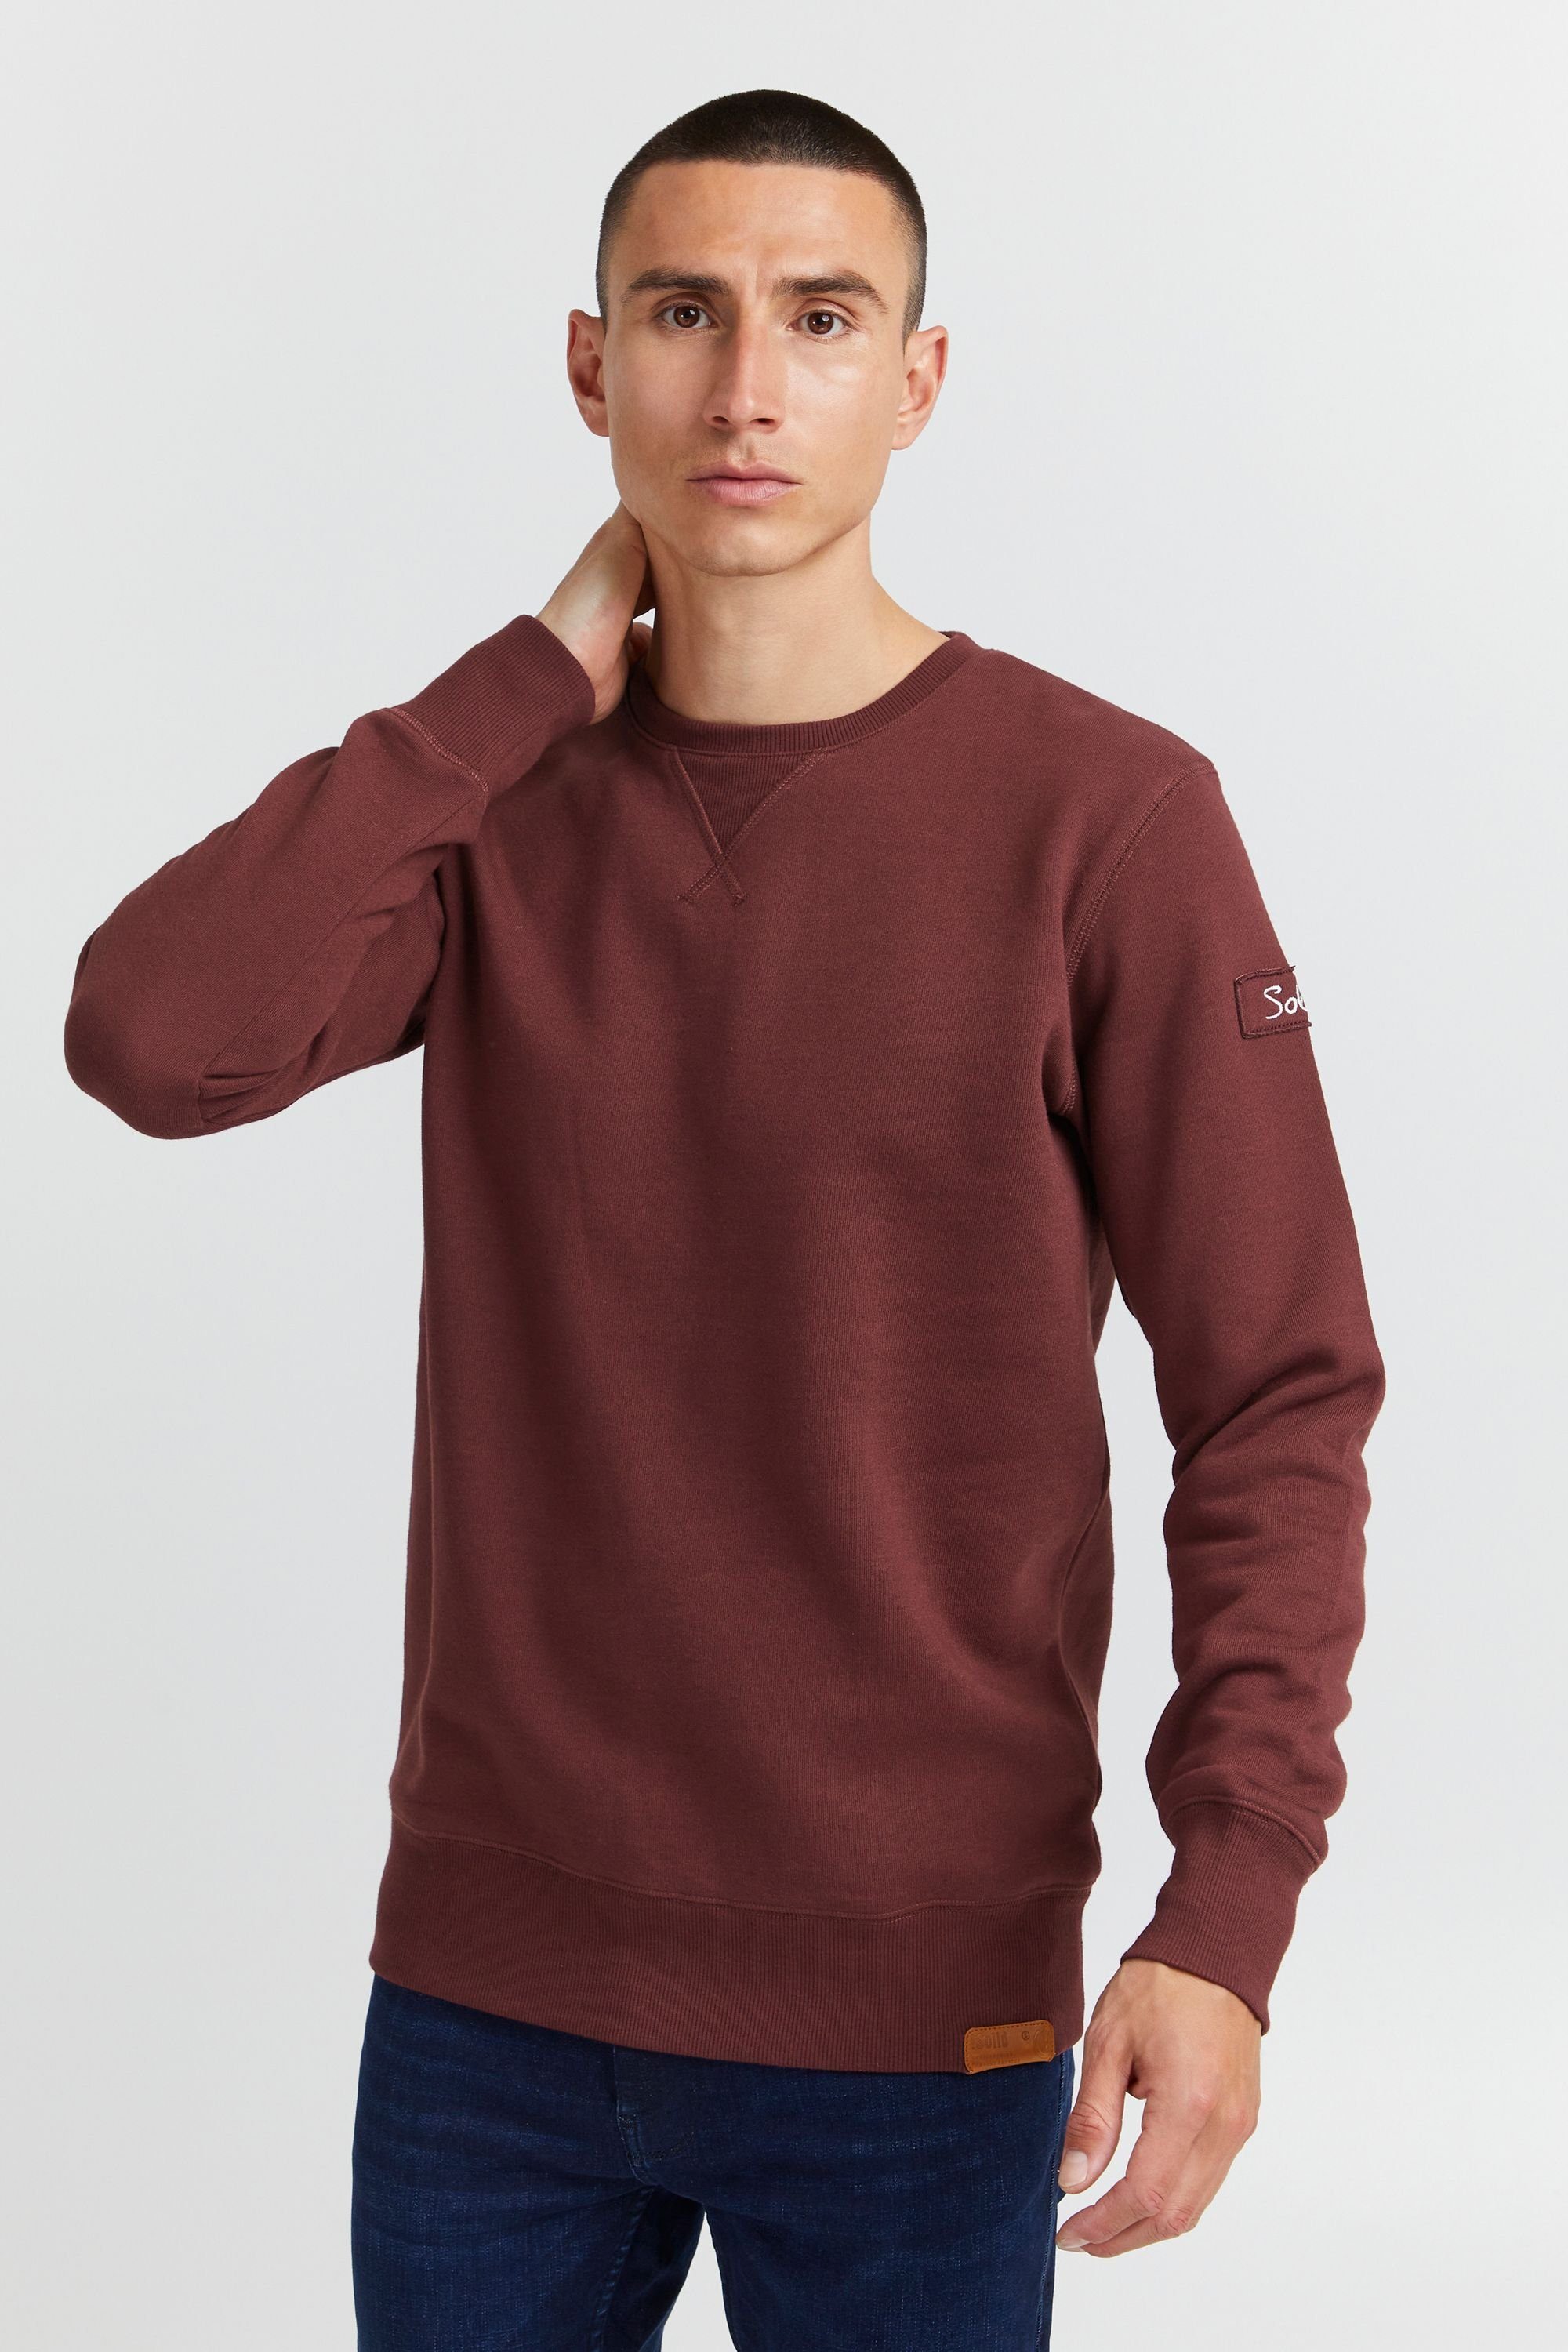 Solid Sweatshirt WINE (790985) RED SDTrip O-Neck